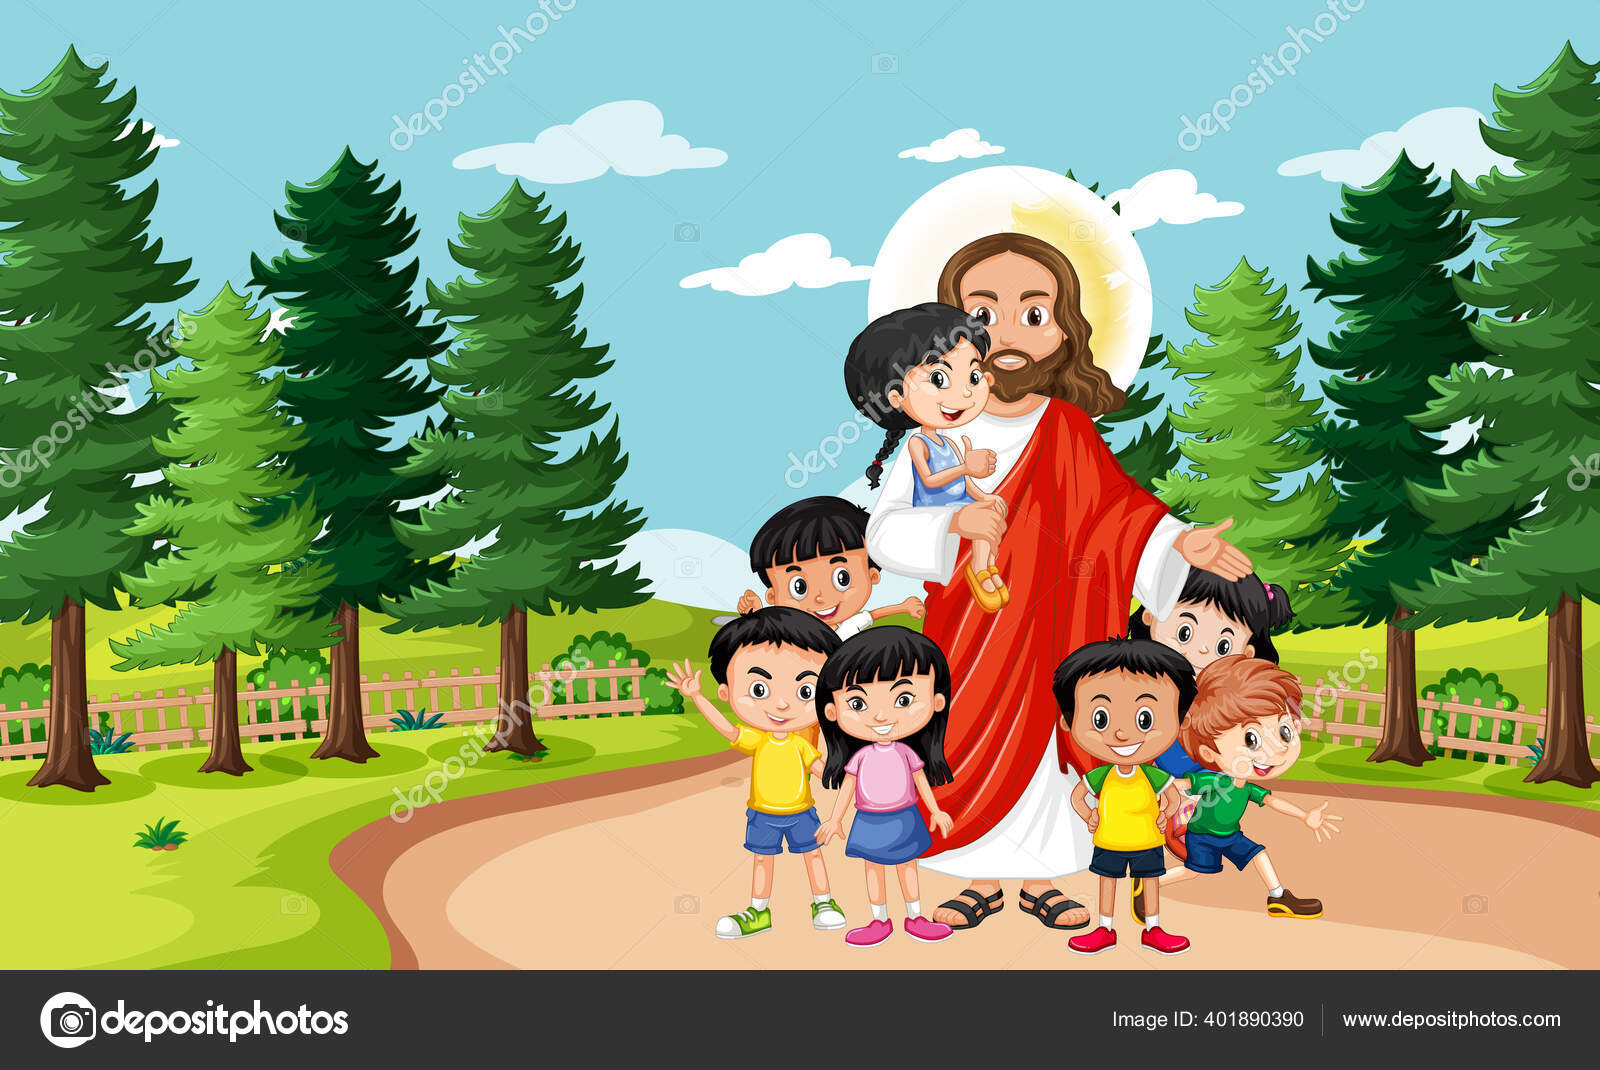 Jesus Children Park Illustration Stock Illustration by ...